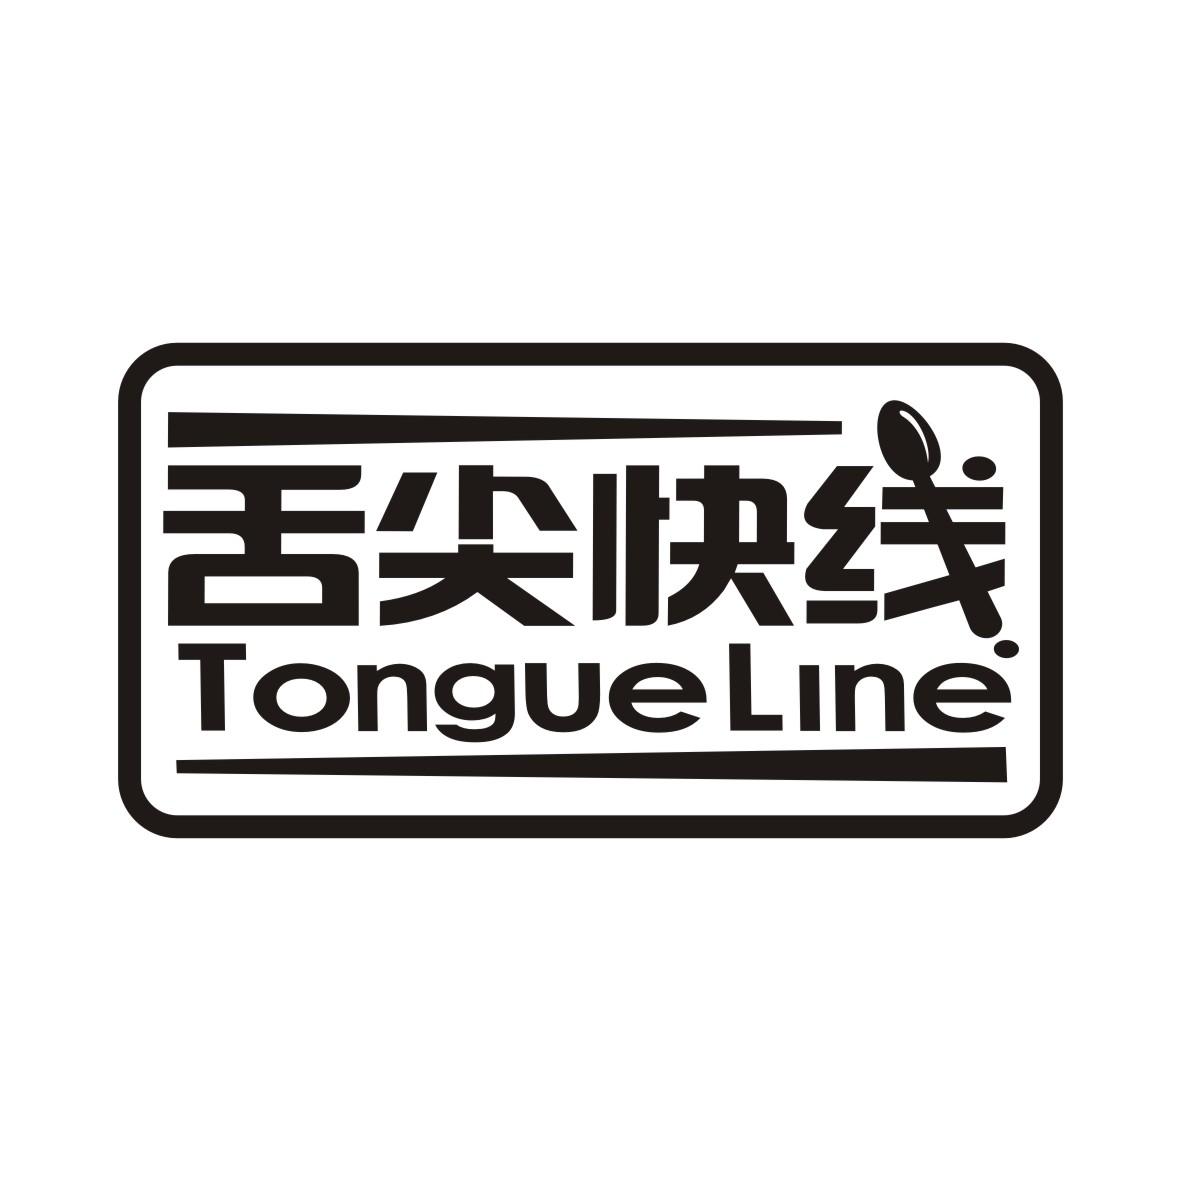 舌尖快线 TONGUE LINE